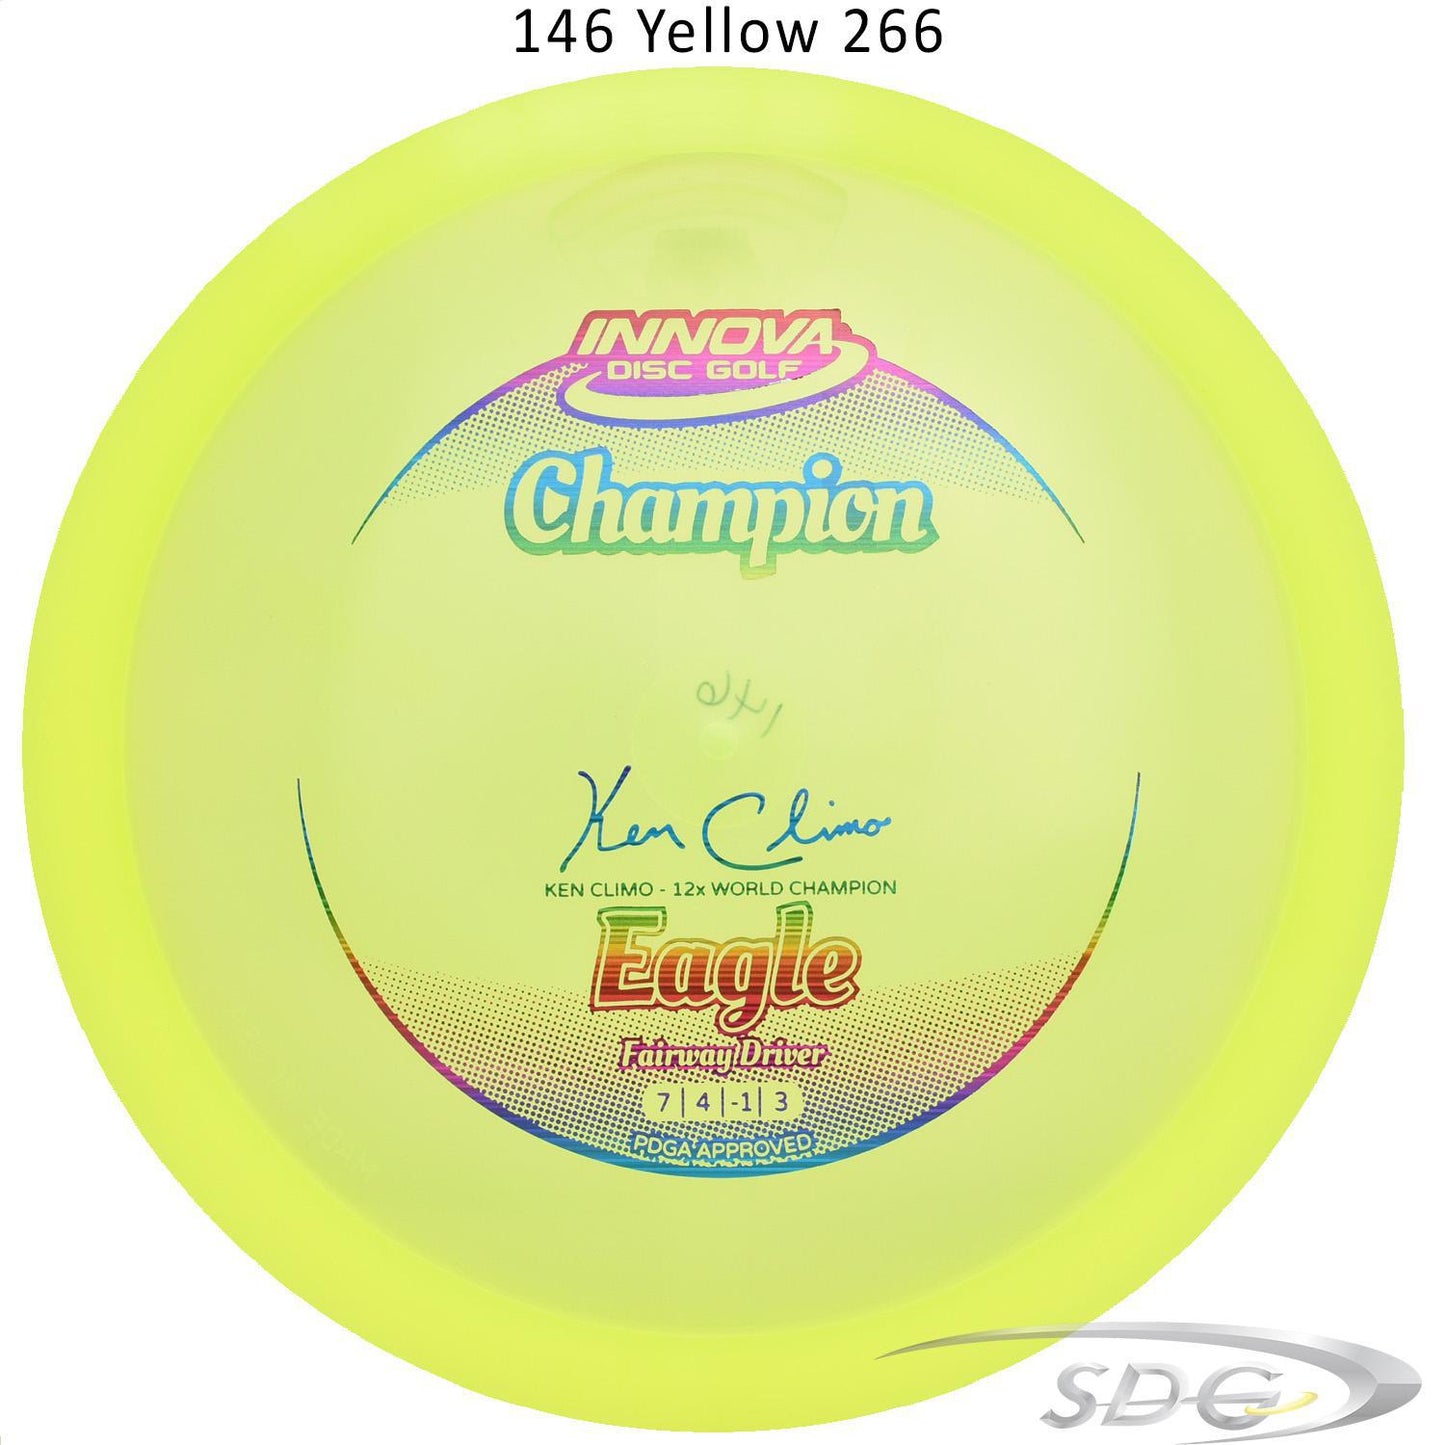 innova-champion-eagle-disc-golf-fairway-driver 146 Yellow 266 